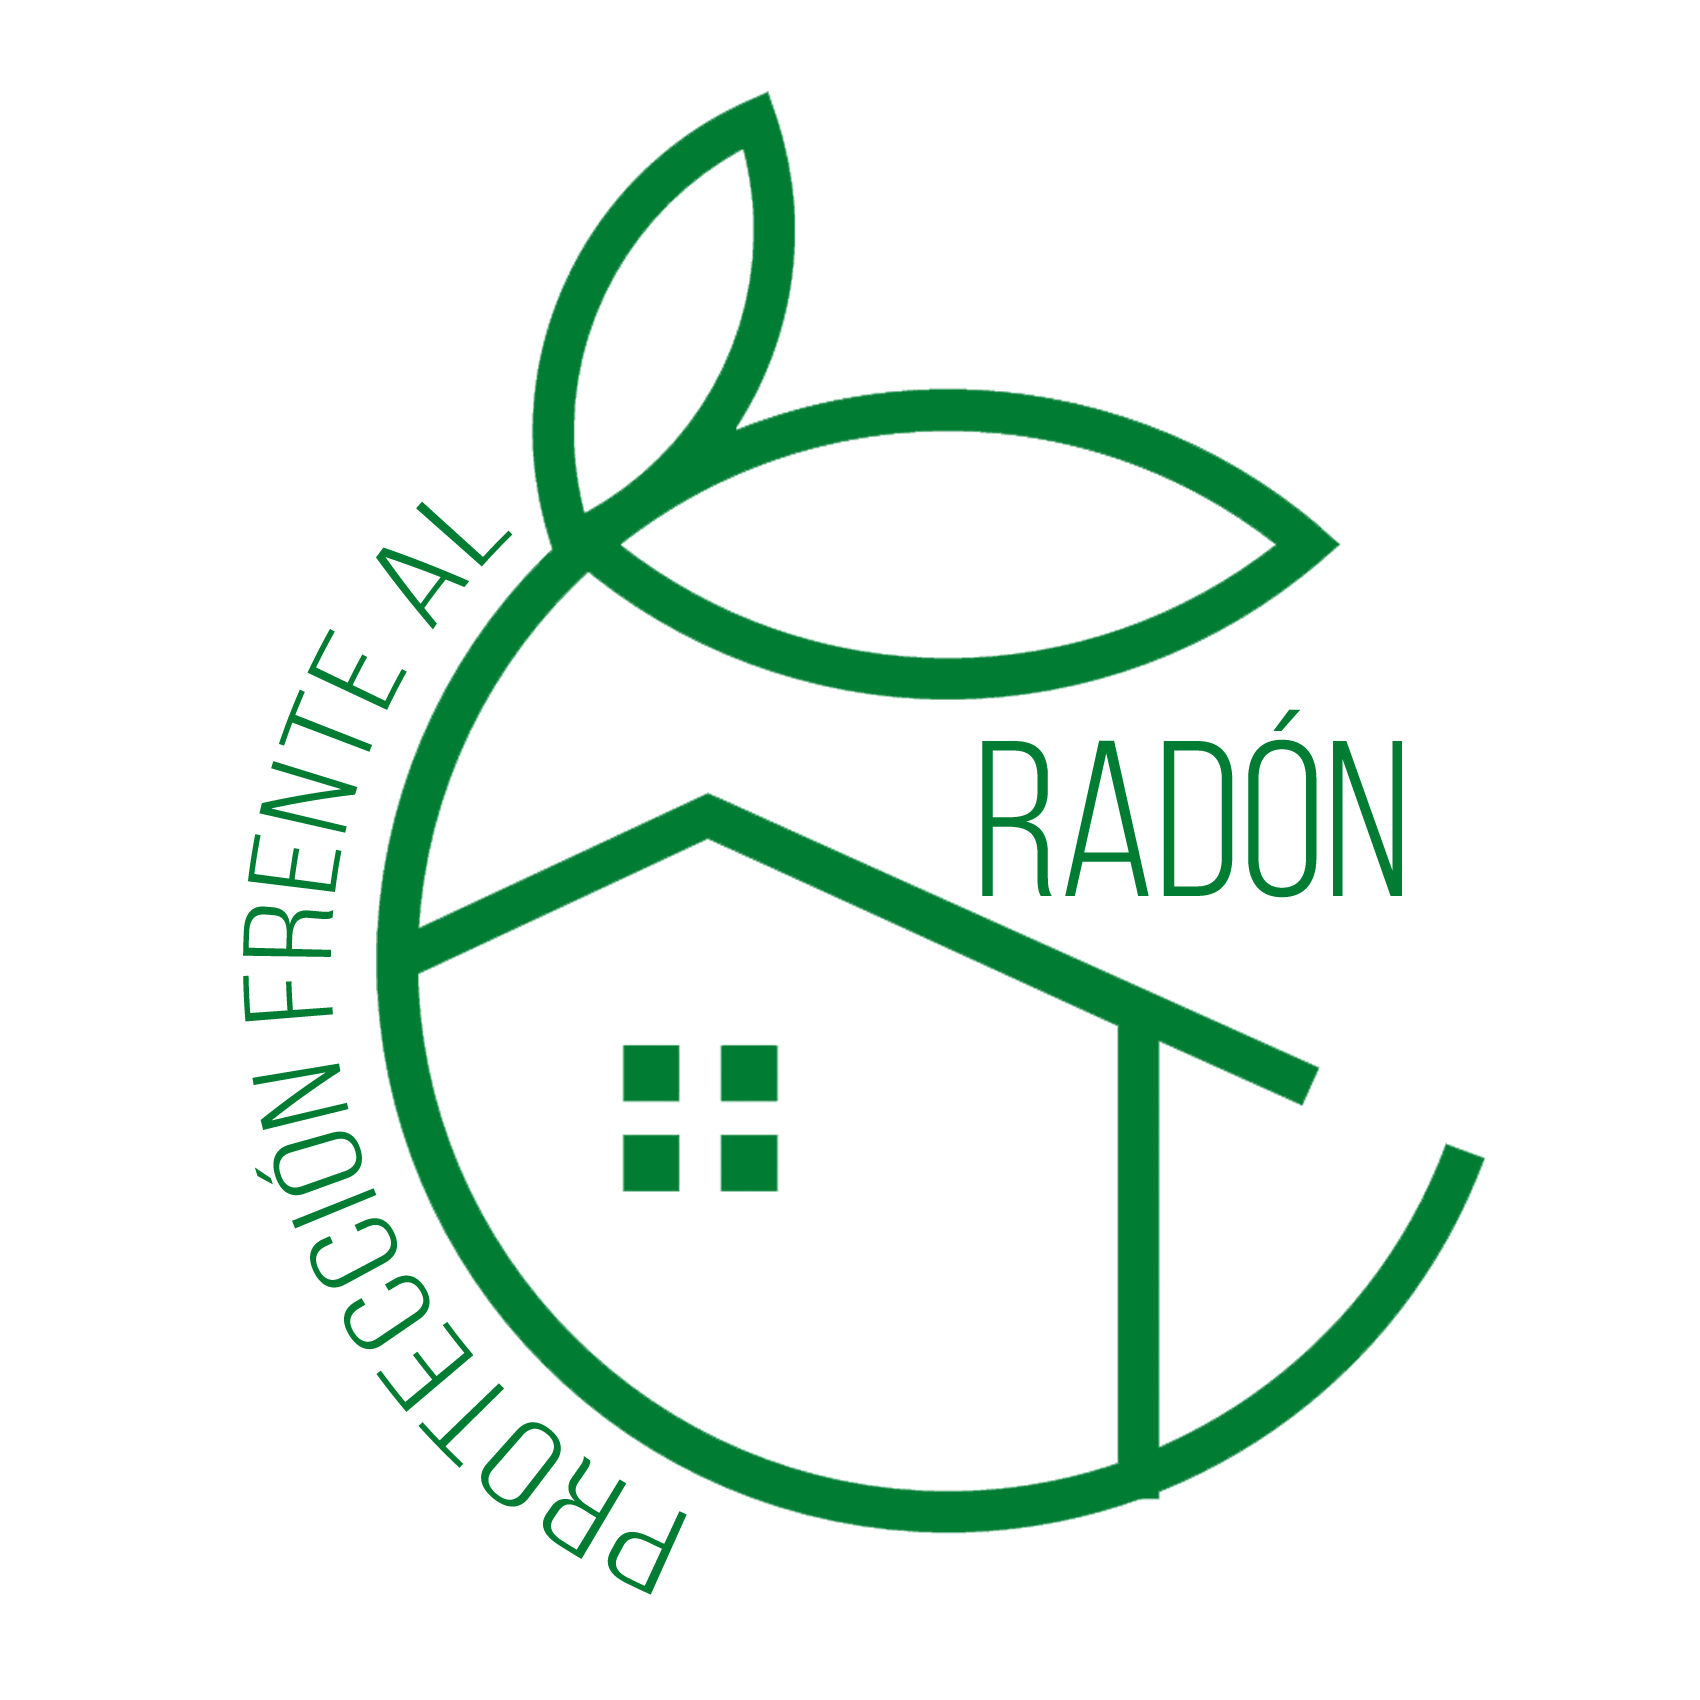 logo-proteccion-frente-al-radon-negativo-verde